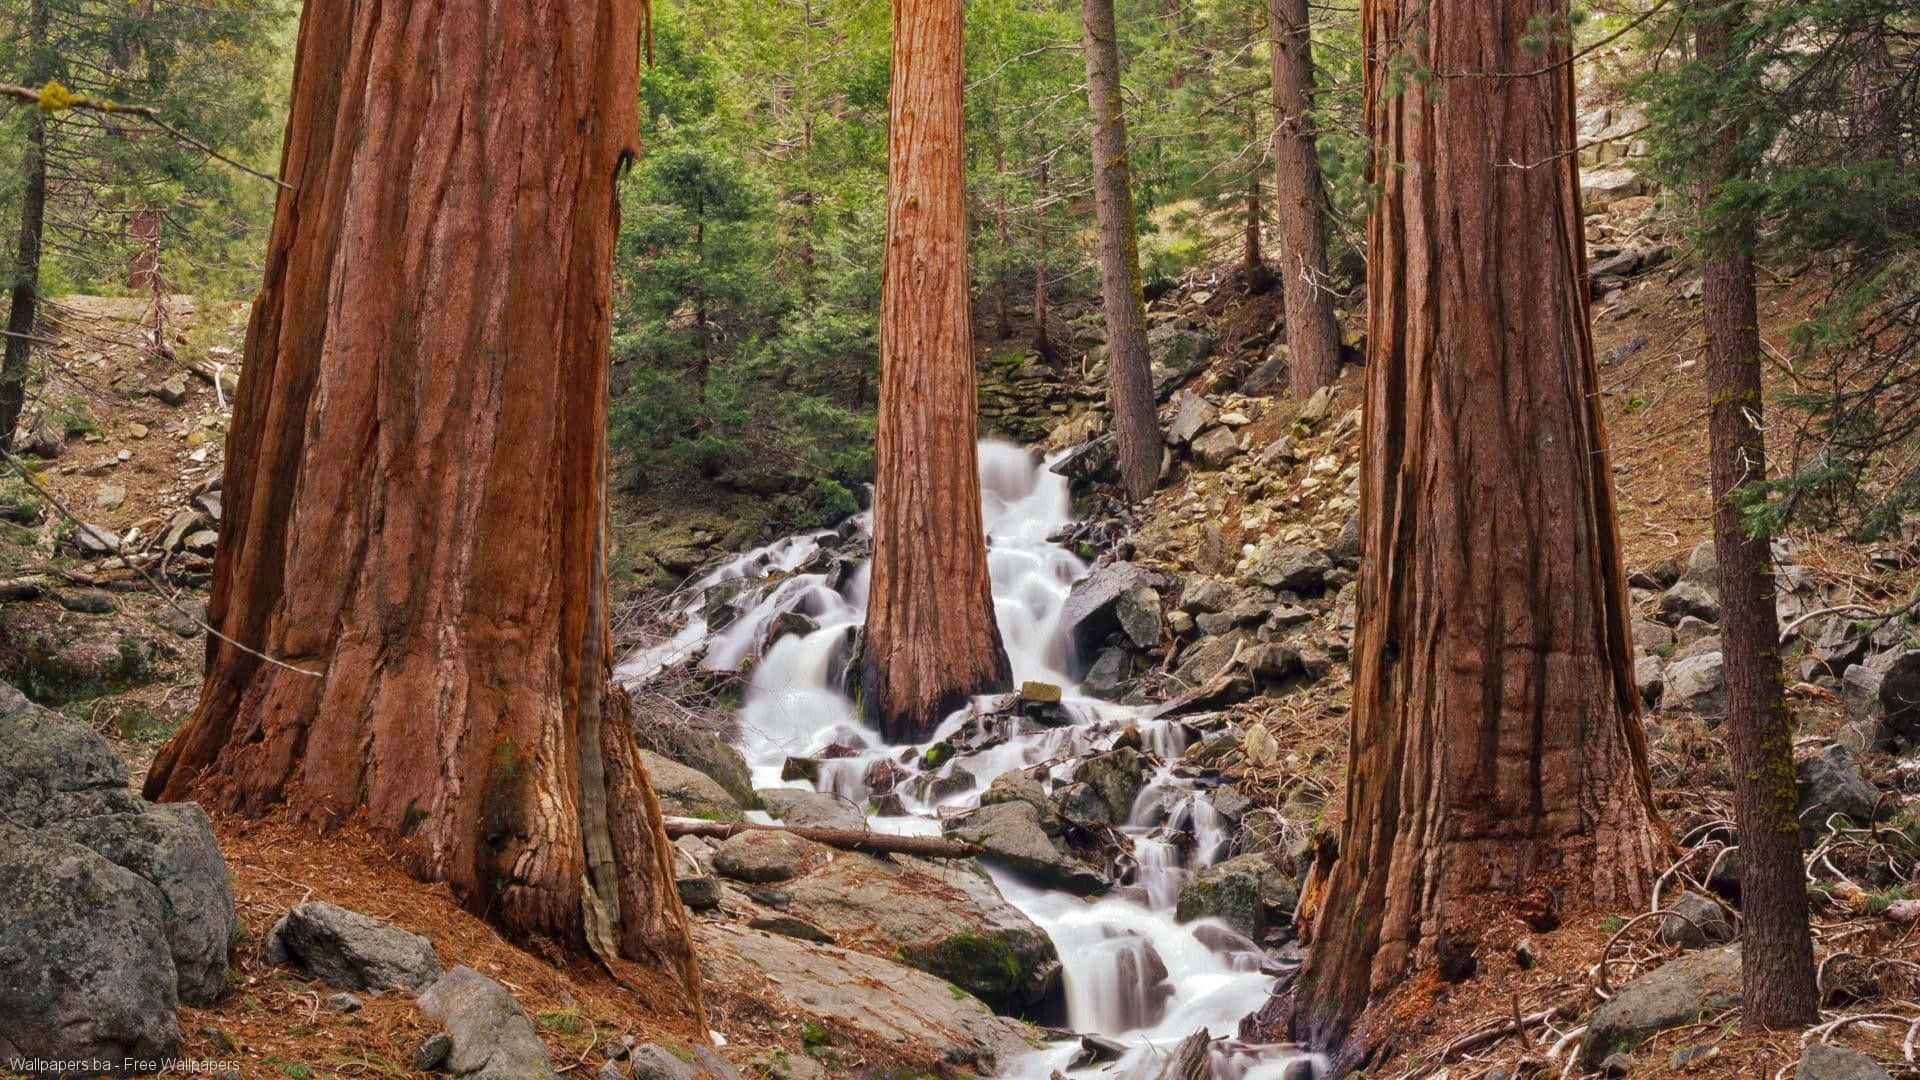 Redwood Trees in California